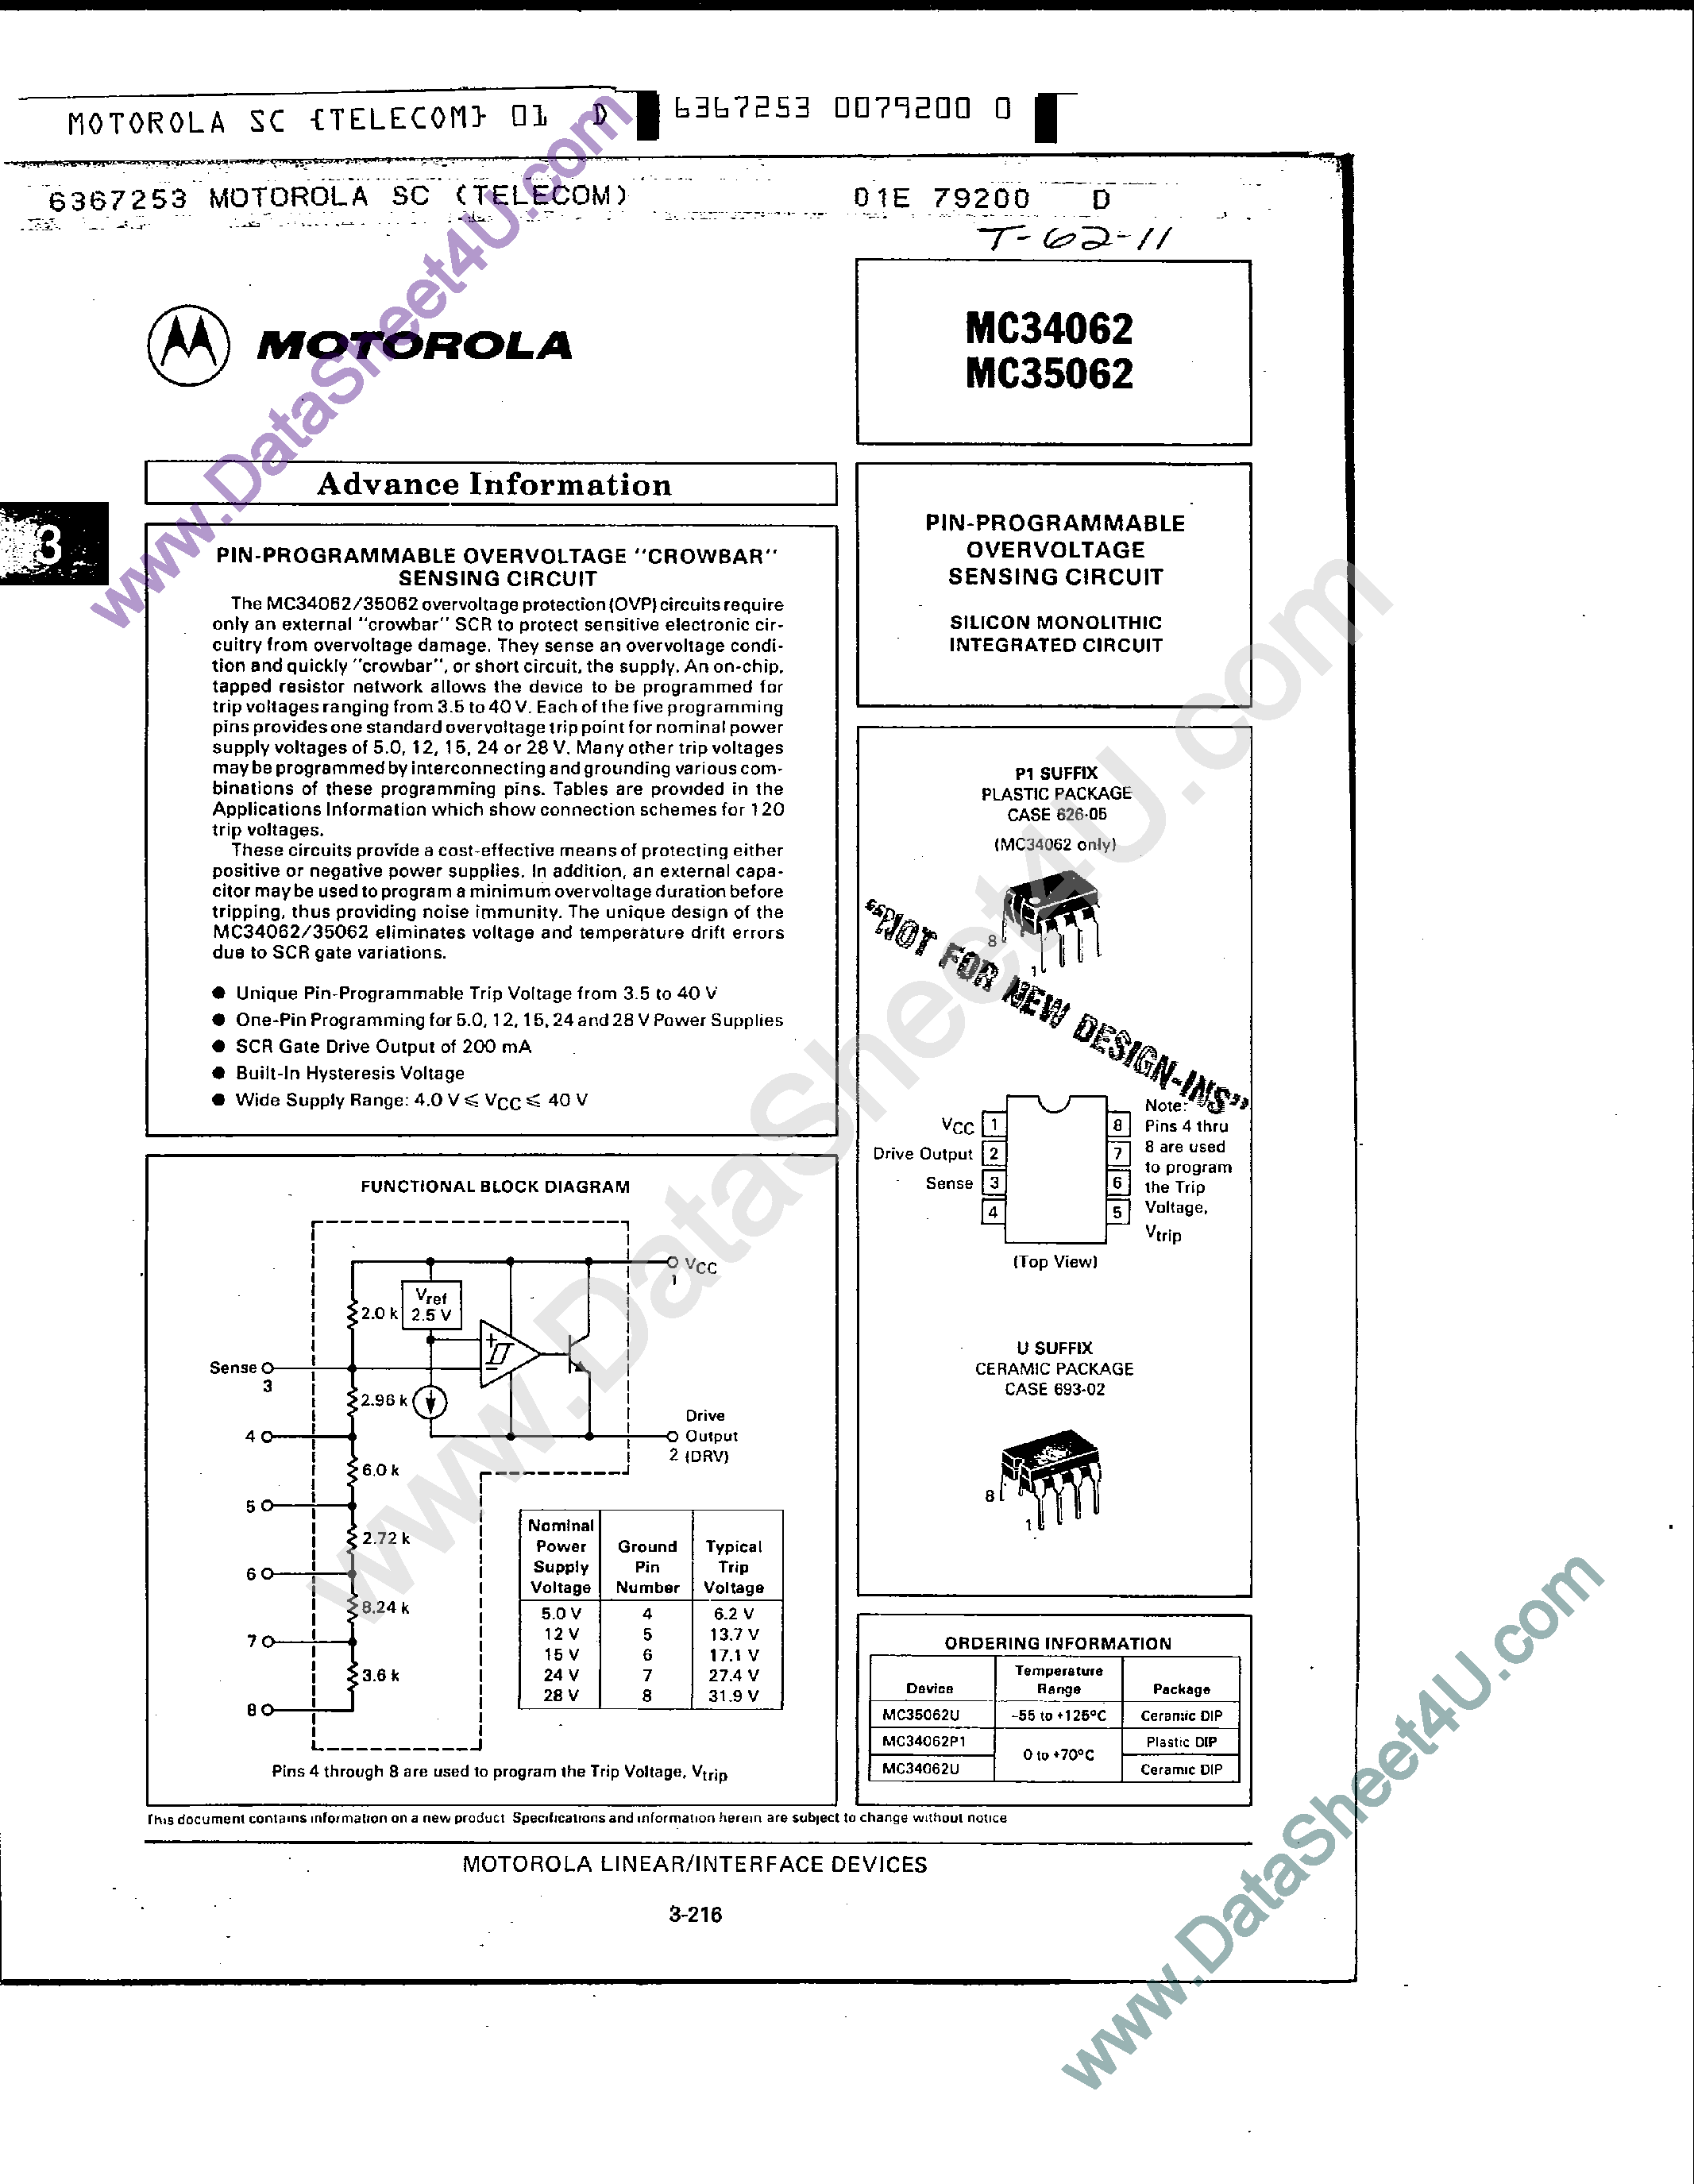 Datasheet MC34062 - (MC34062 / MC35062) PIN-PROGRAMMABLE OVERVOLTAGE SENSING CIRCUIT page 1